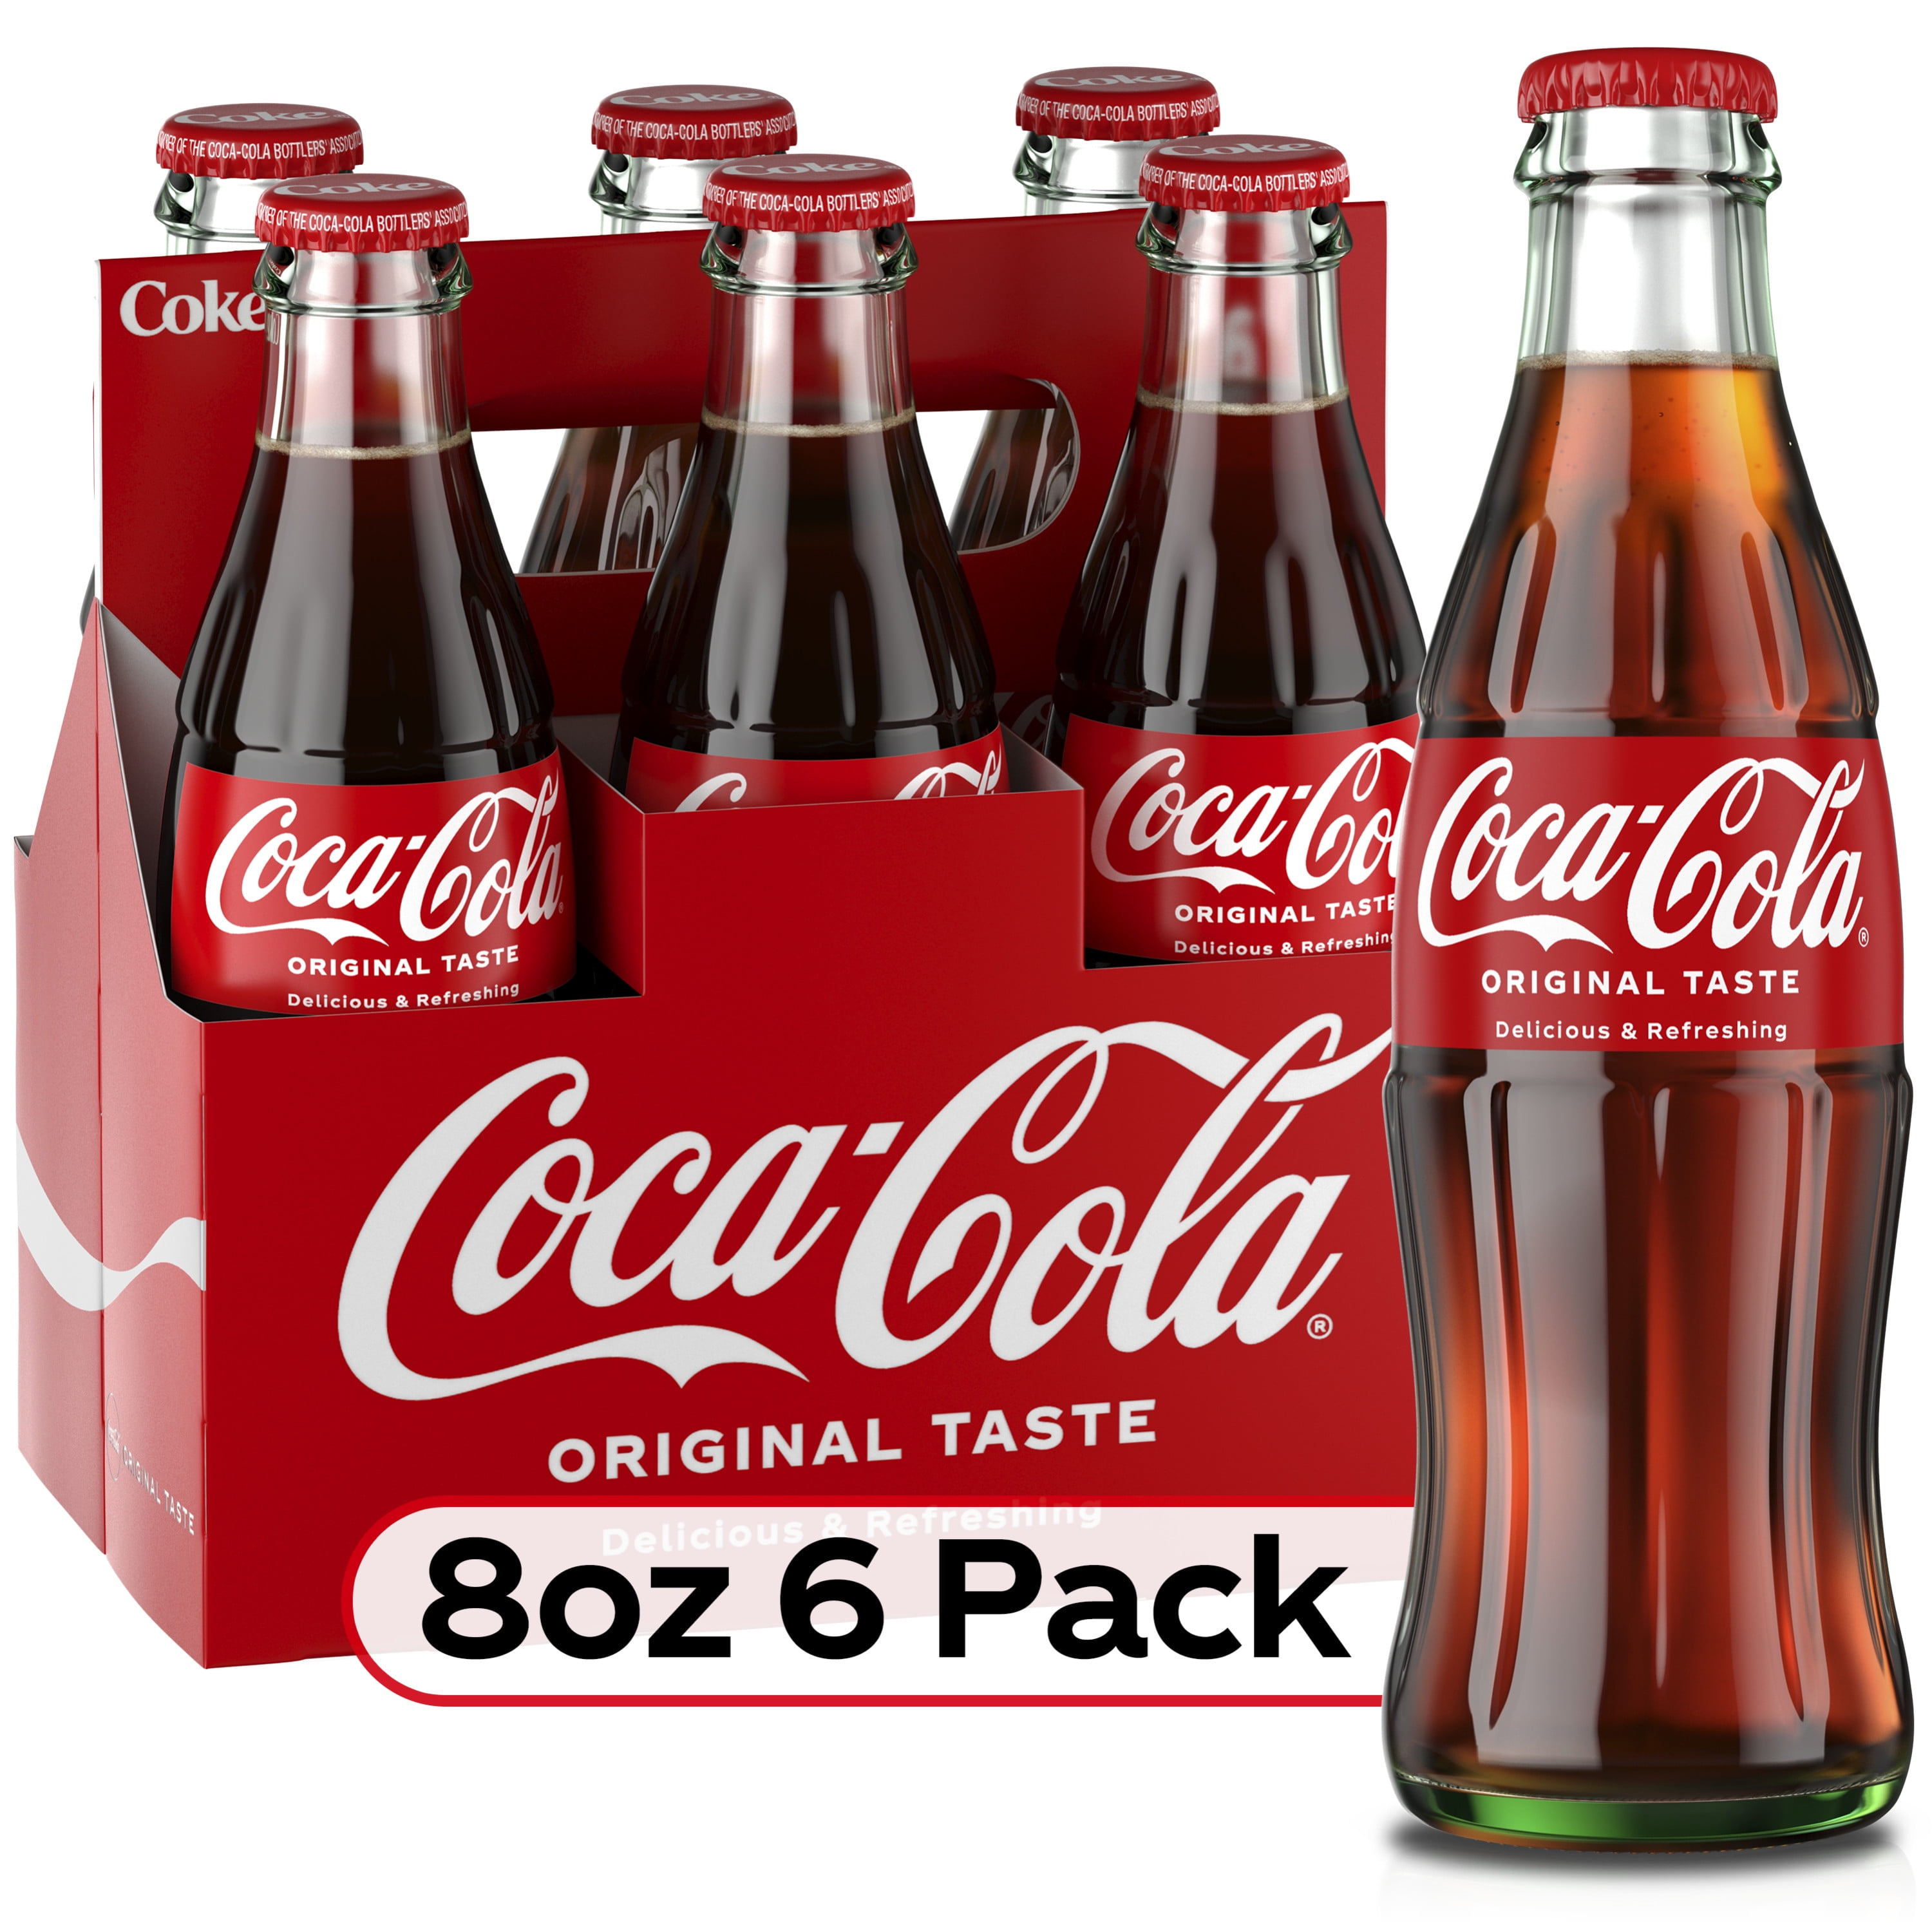 Soda COCA-COLA mini canette 12x15cl pack frigo at pocket 15cl